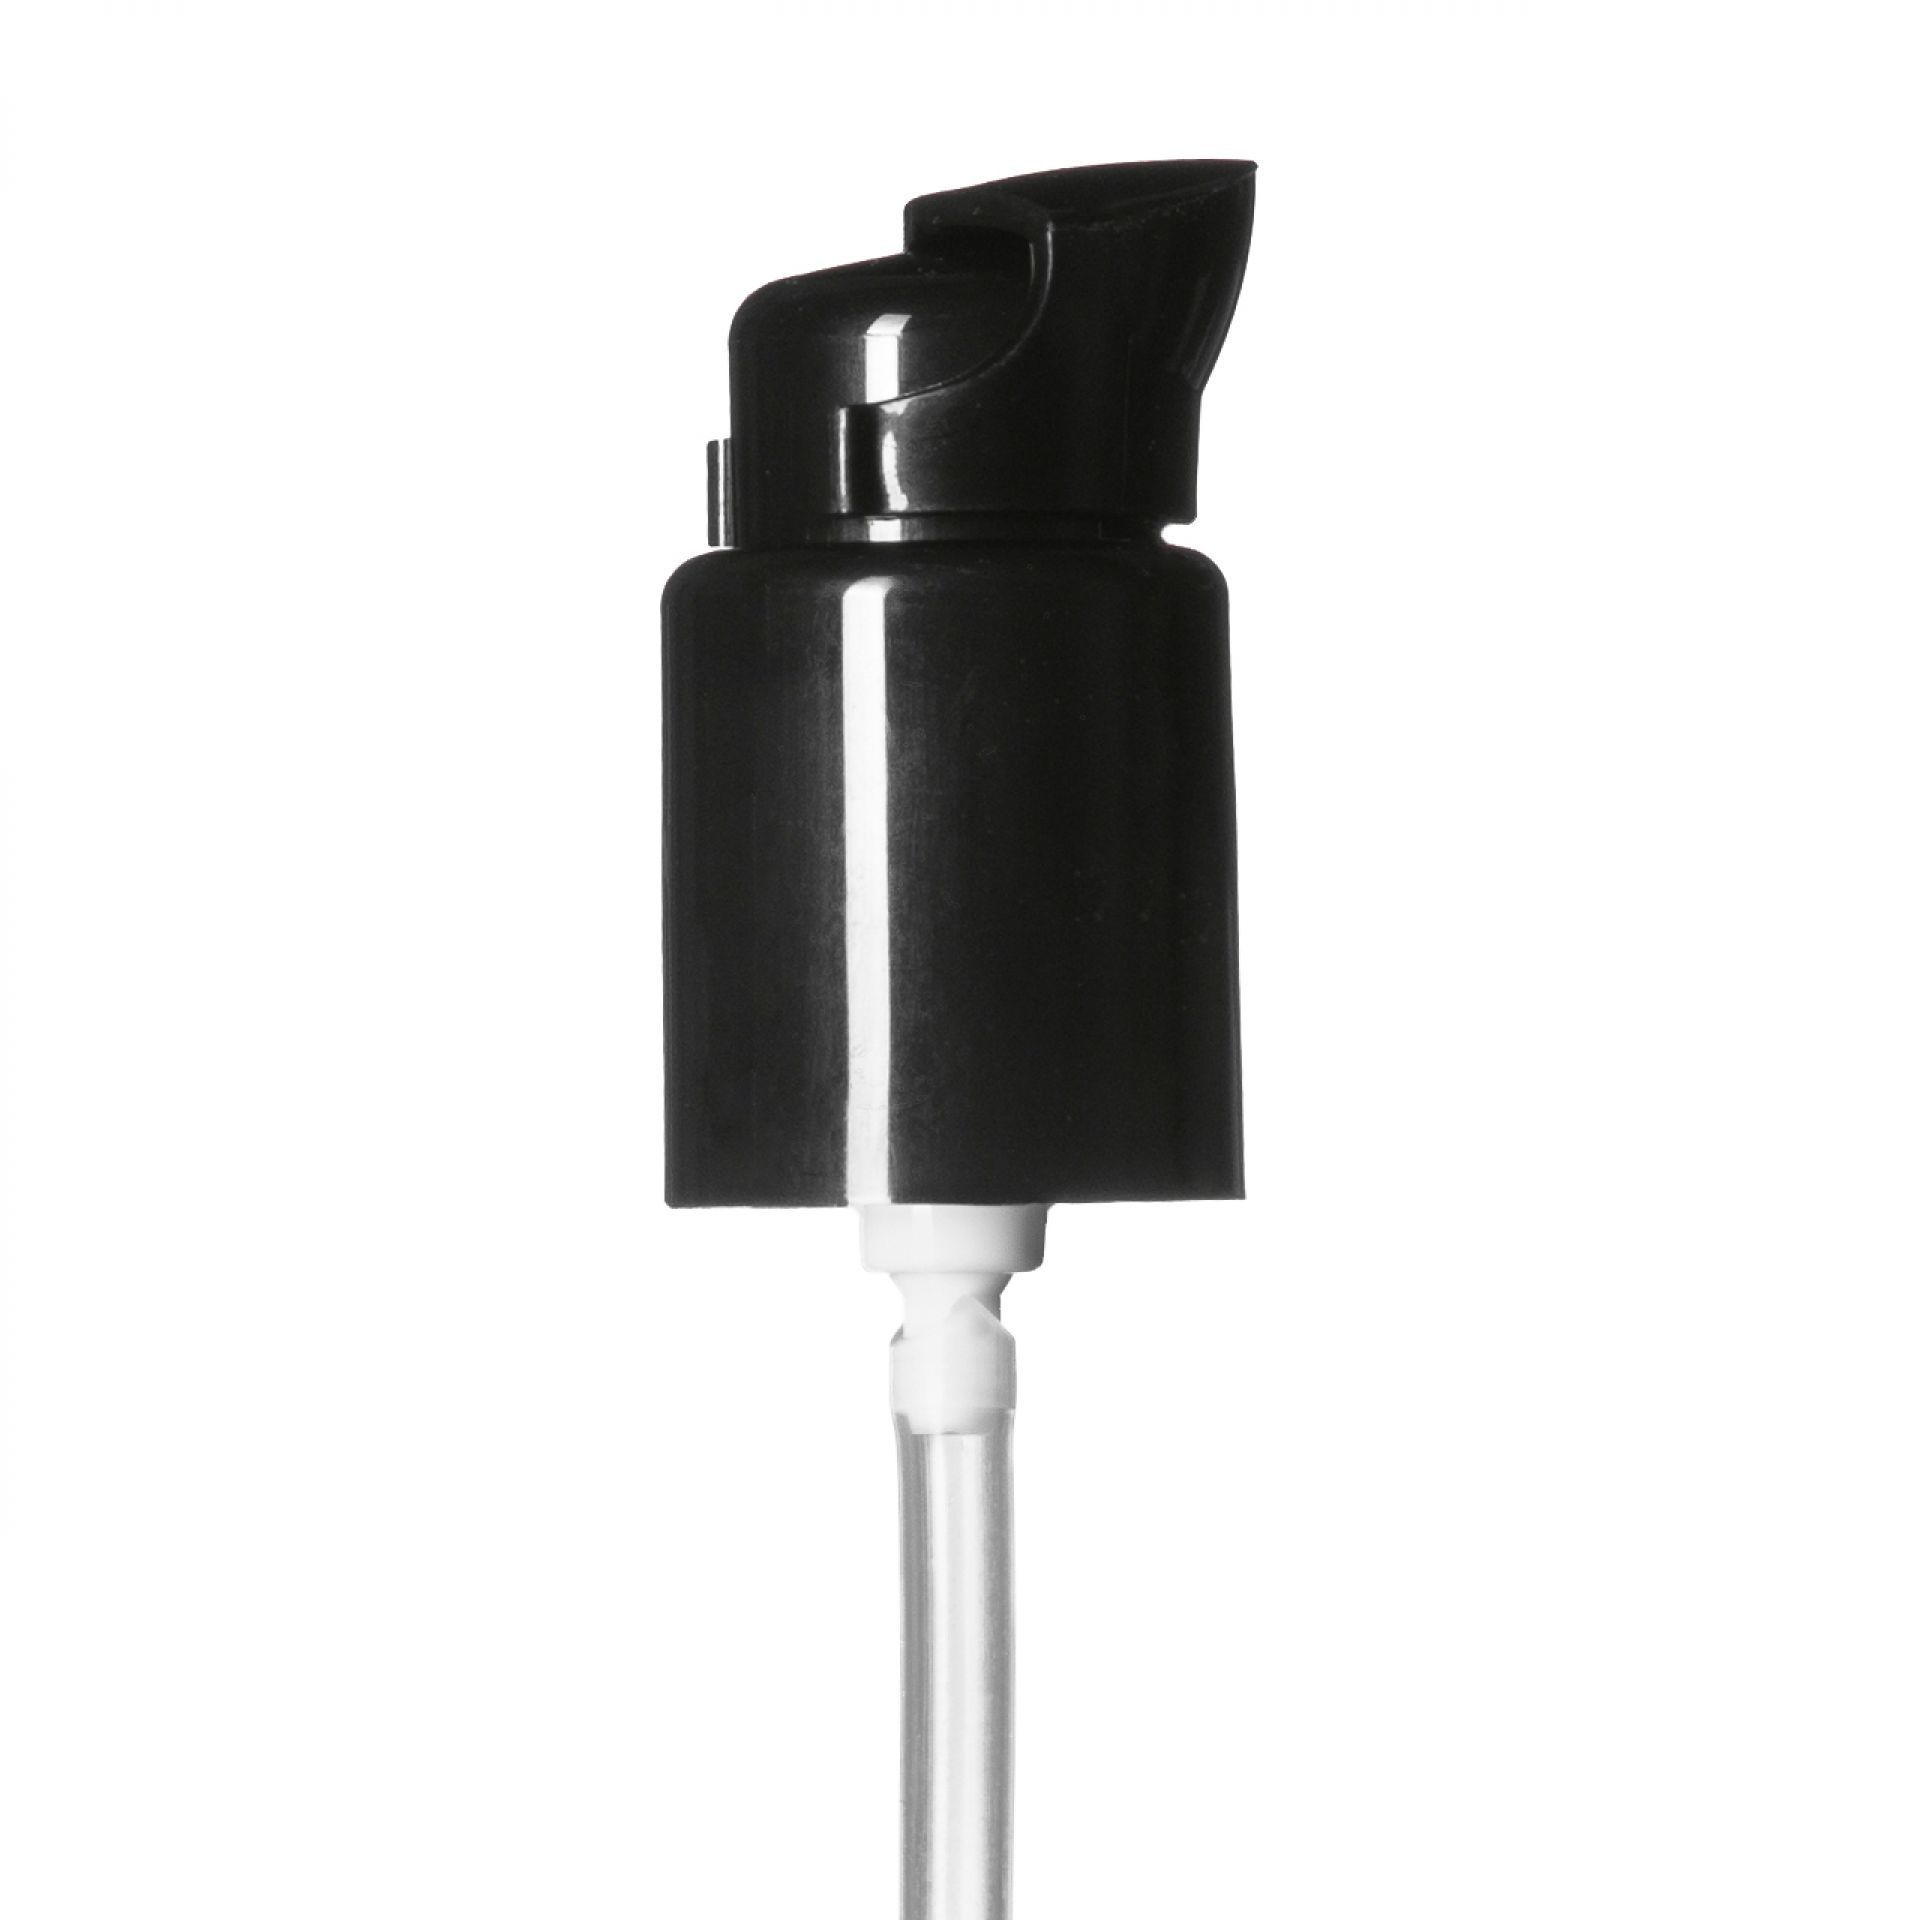 Lotion pump Metropolitan 18/415, PP, black, dose 0.15ml, black security clip (Victor 100)